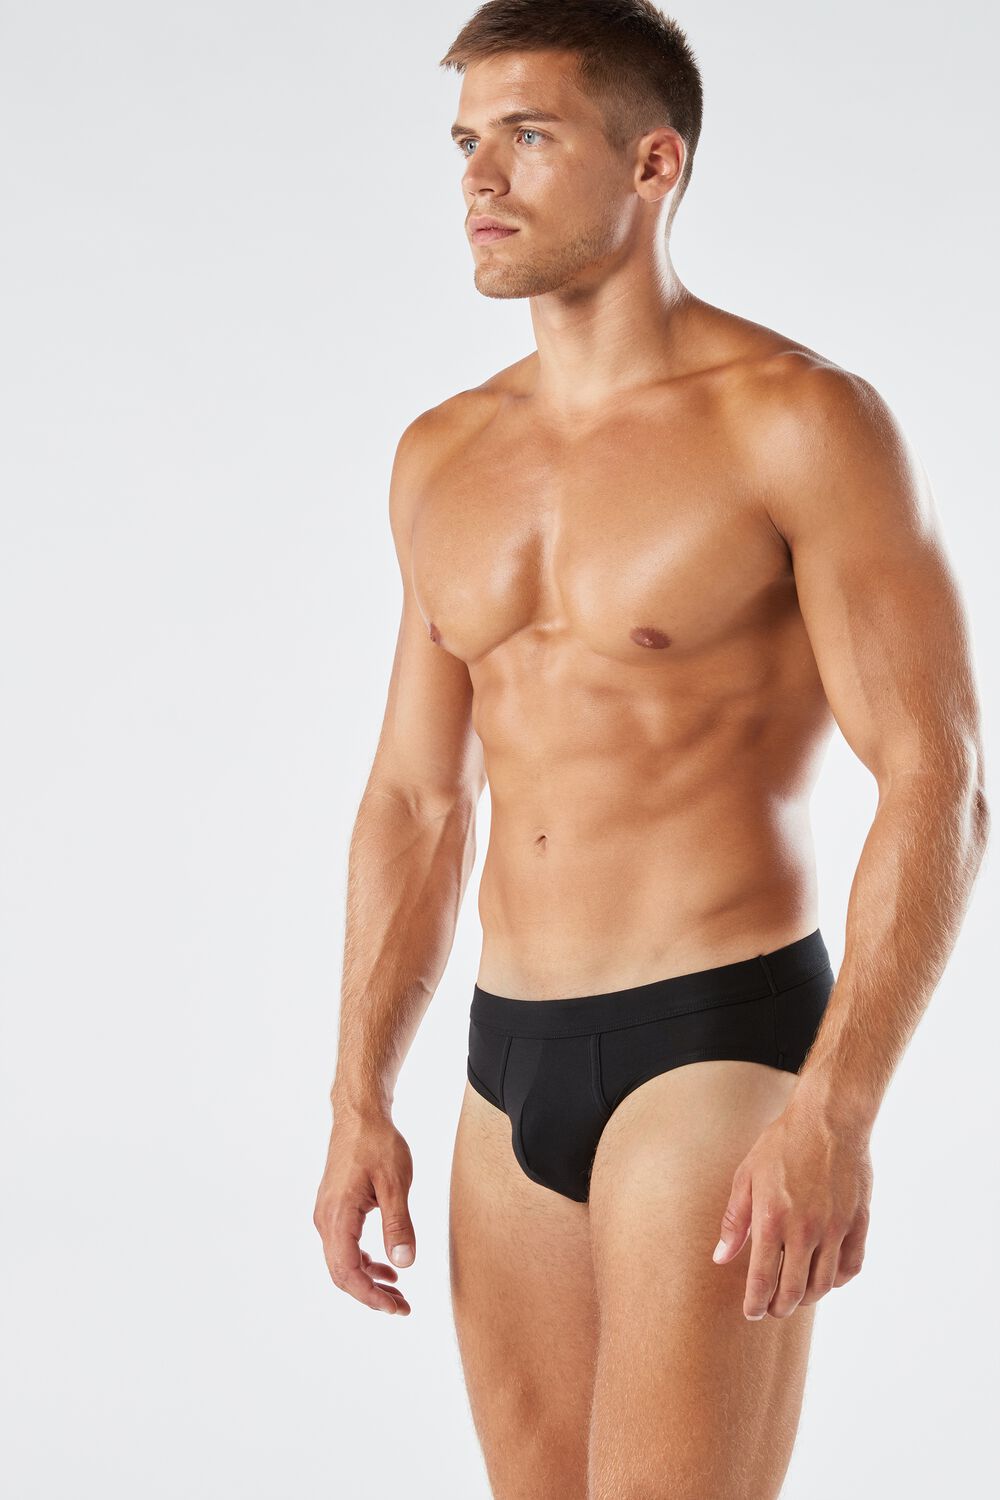 Italian Elgance in Men's Underwear – intimissimi – Underwear News